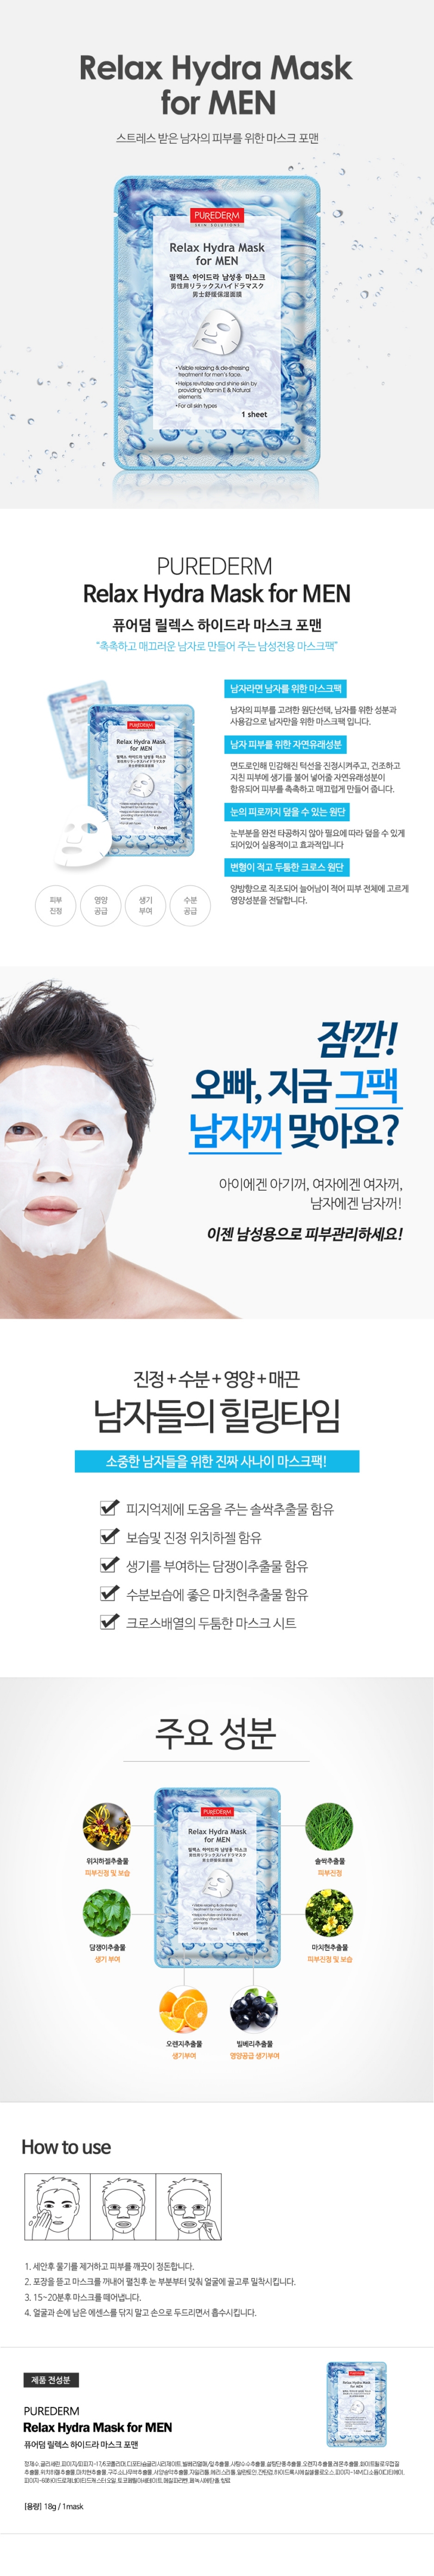 Purederm Relax Hydra Mask for Men (18g) D01.jpg